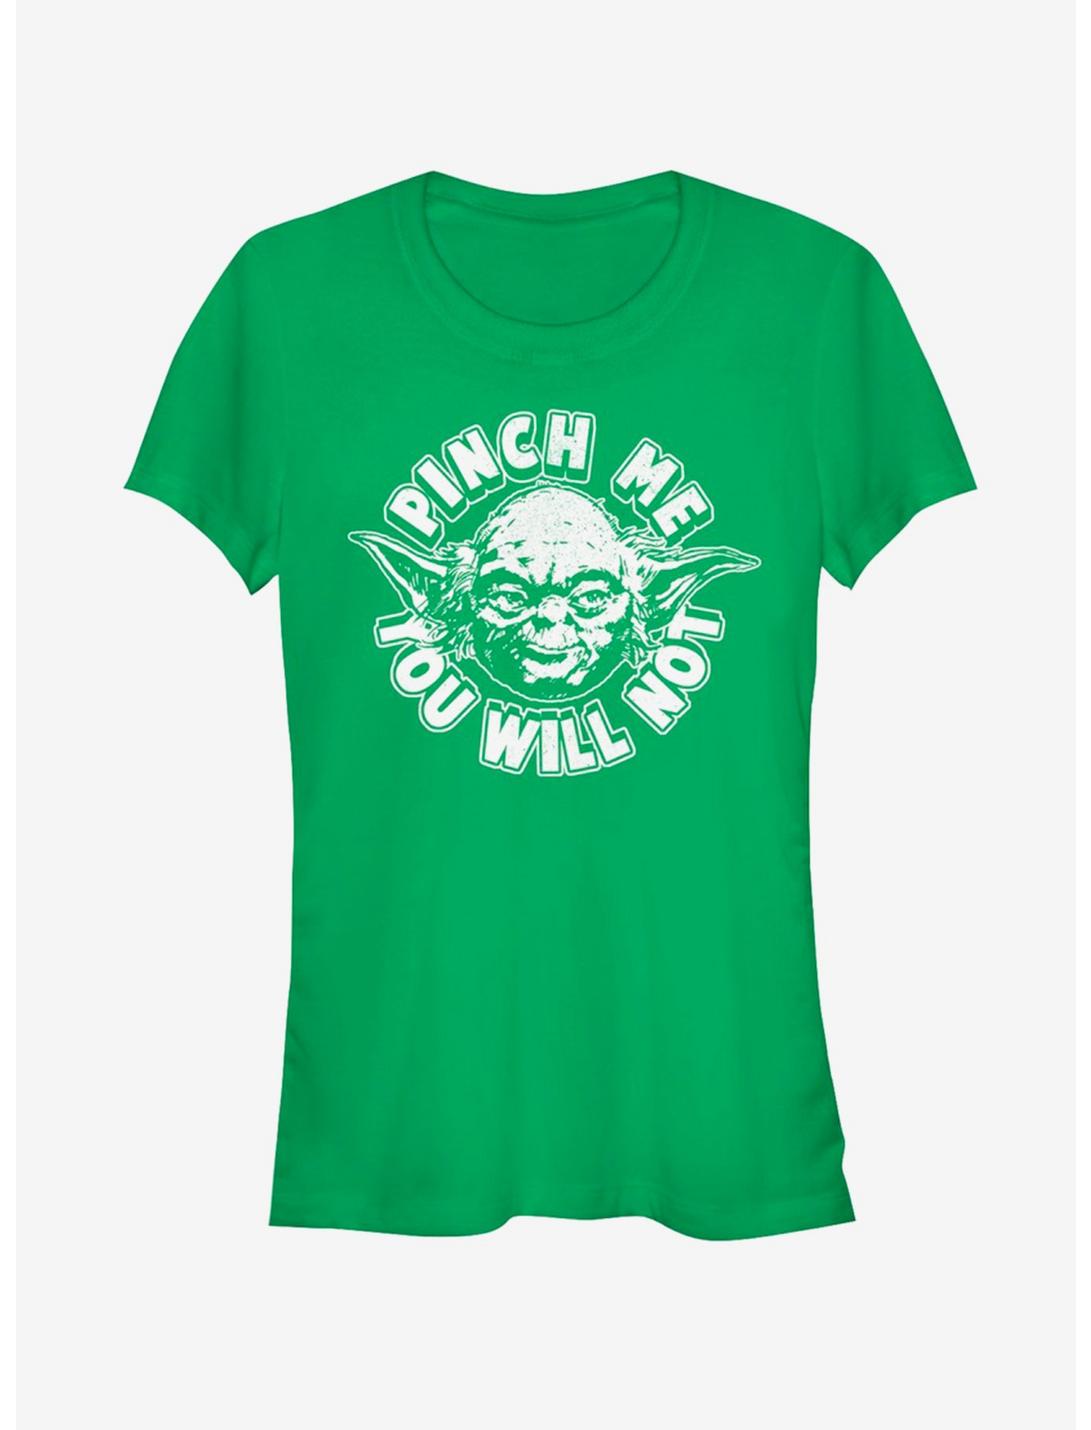 Star Wars Yoda Pinch Me Girls T-Shirt, KELLY, hi-res